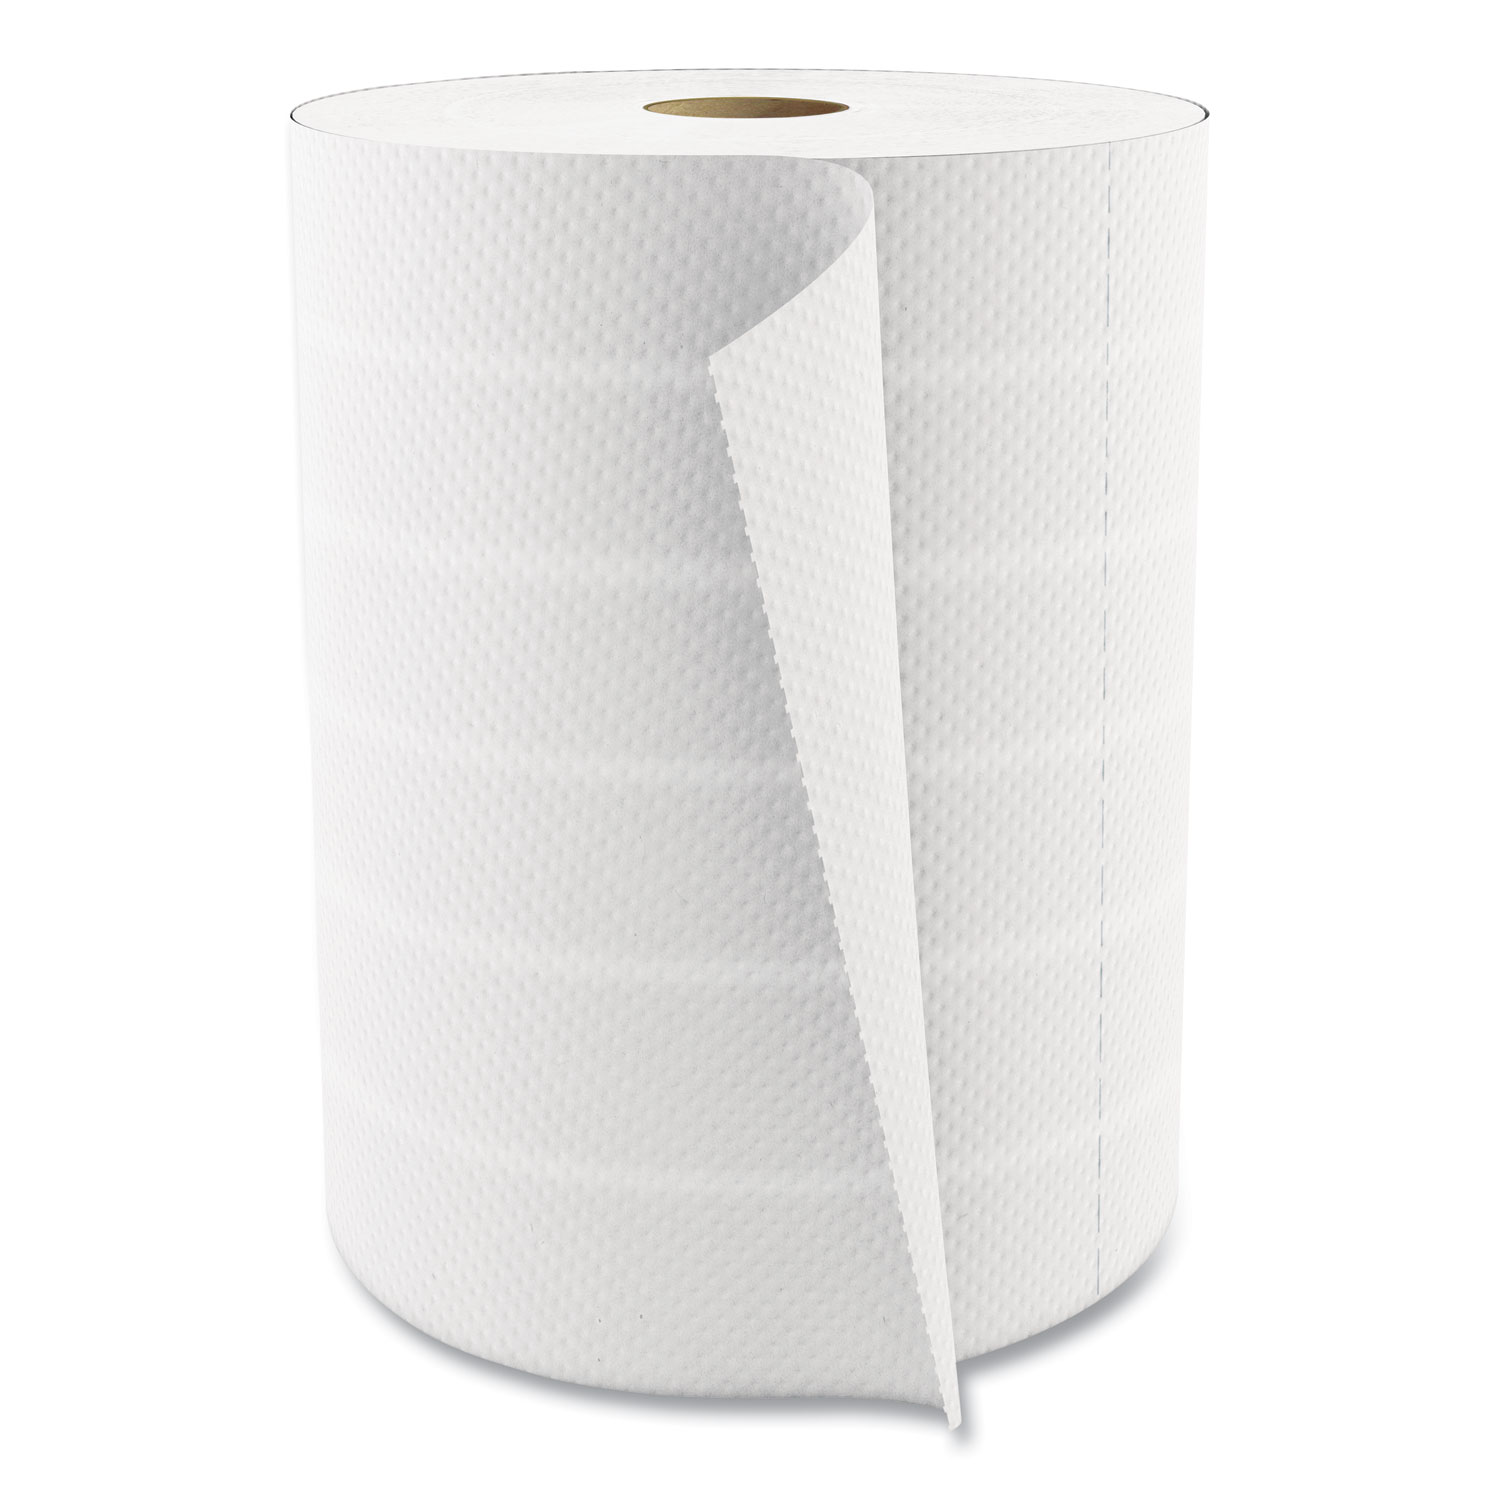  Cascades PRO U450 Select Kitchen Roll Towels, 2-Ply, 11 x 8, White, 450/Roll, 12/Carton (CSDU450) 